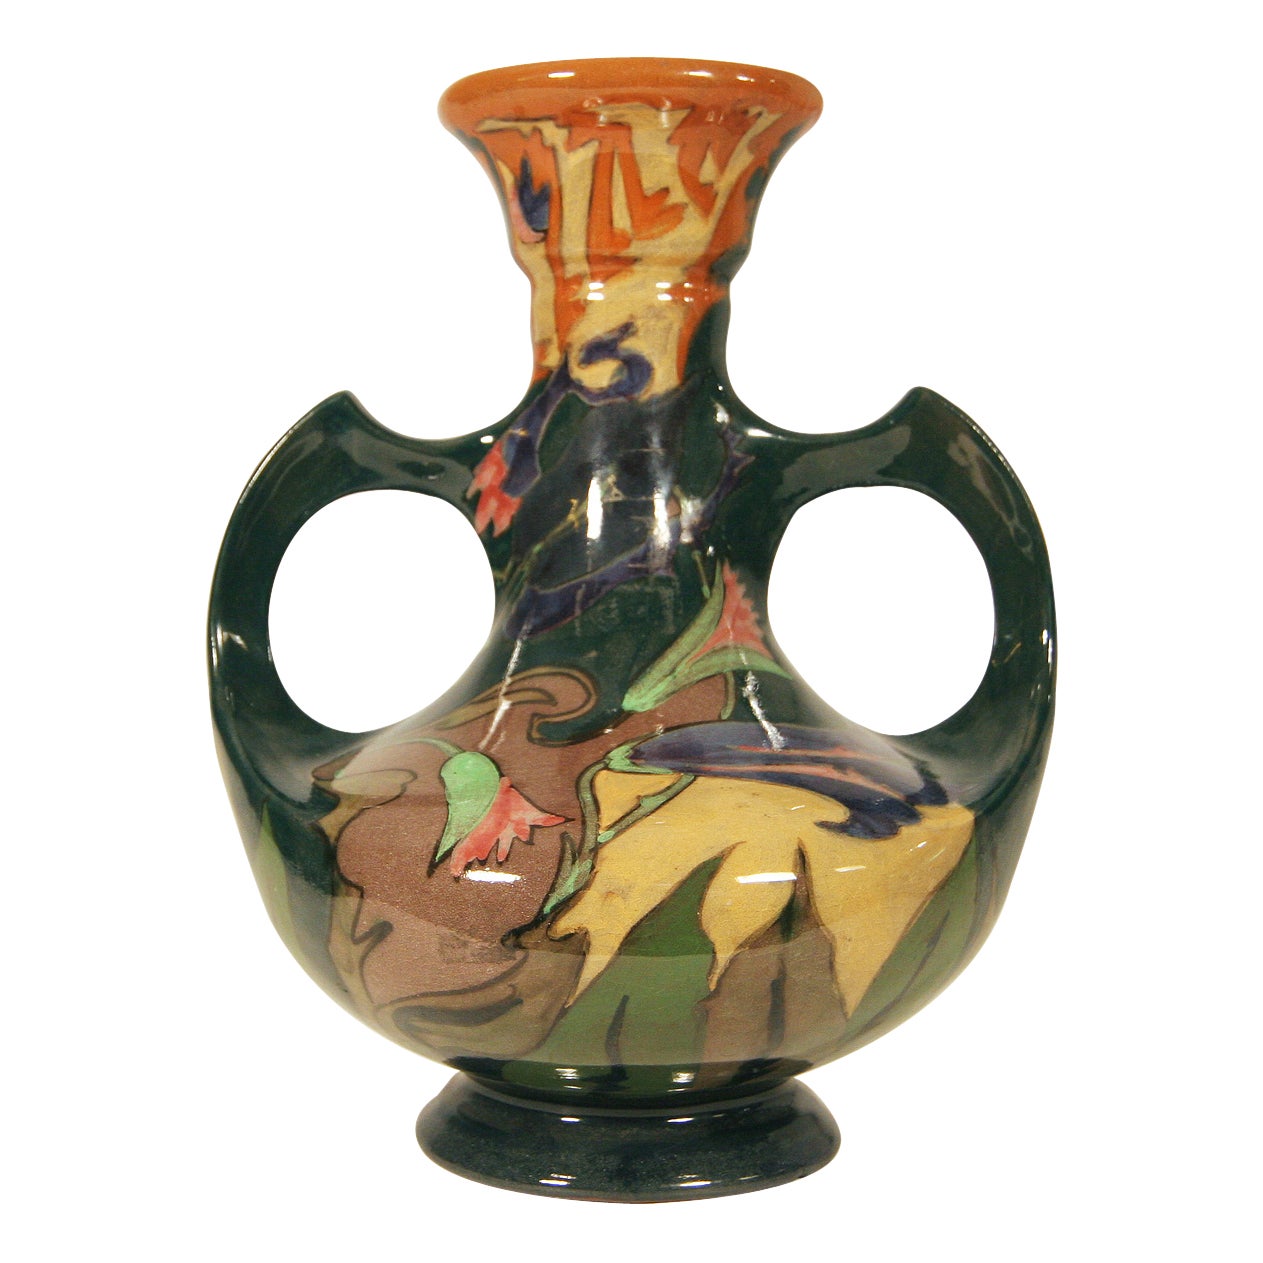 1899 Gouda Pottery Vase by Bernardus Römer for Zuid-Holland